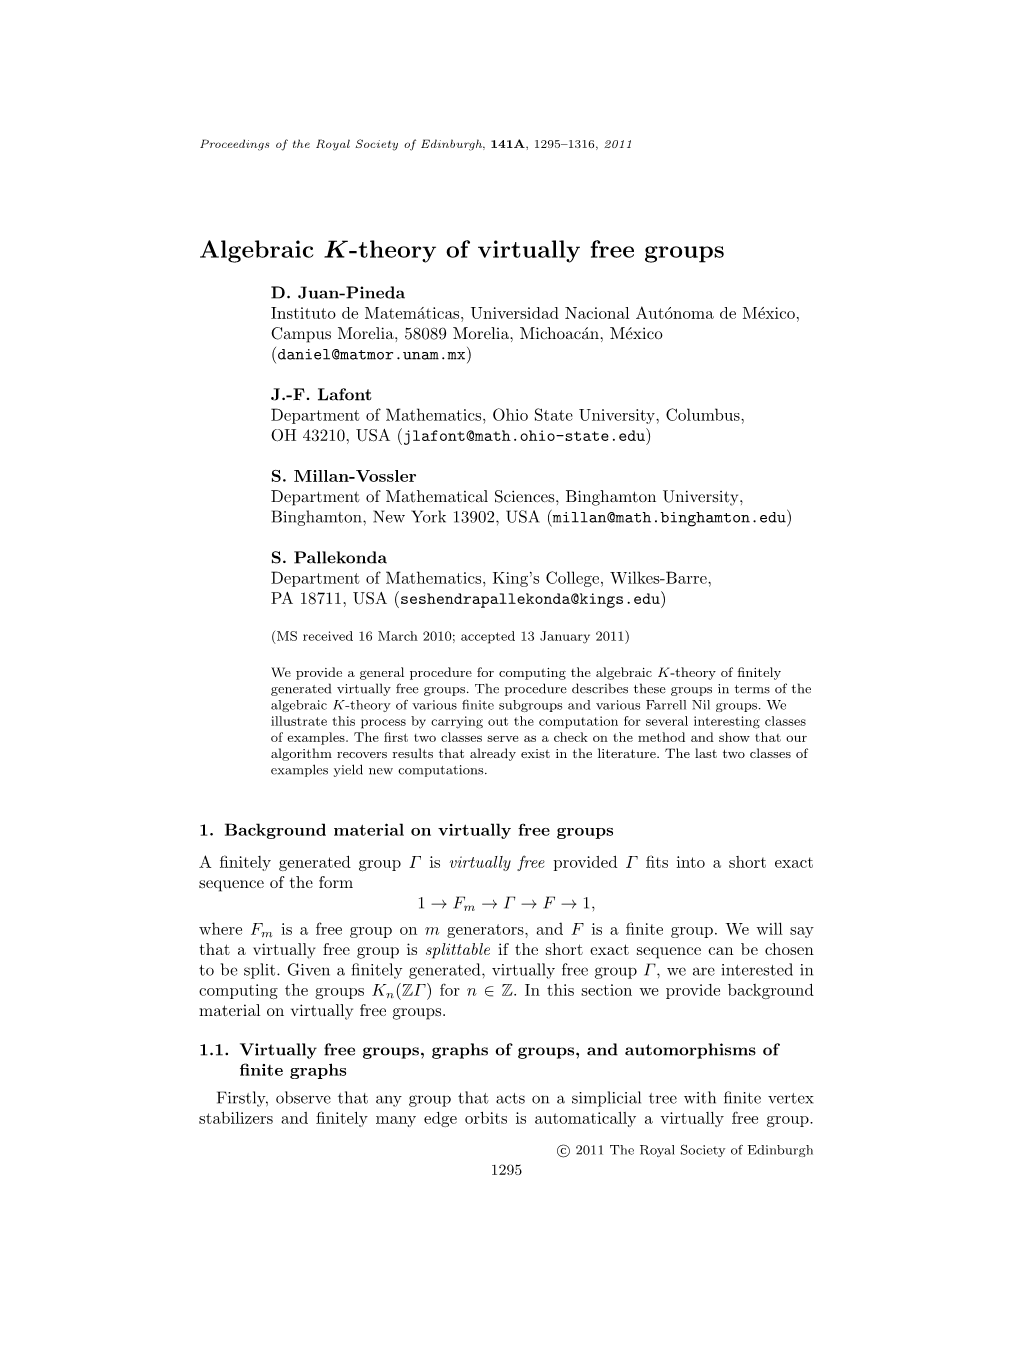 Algebraic K-Theory of Virtually Free Groups